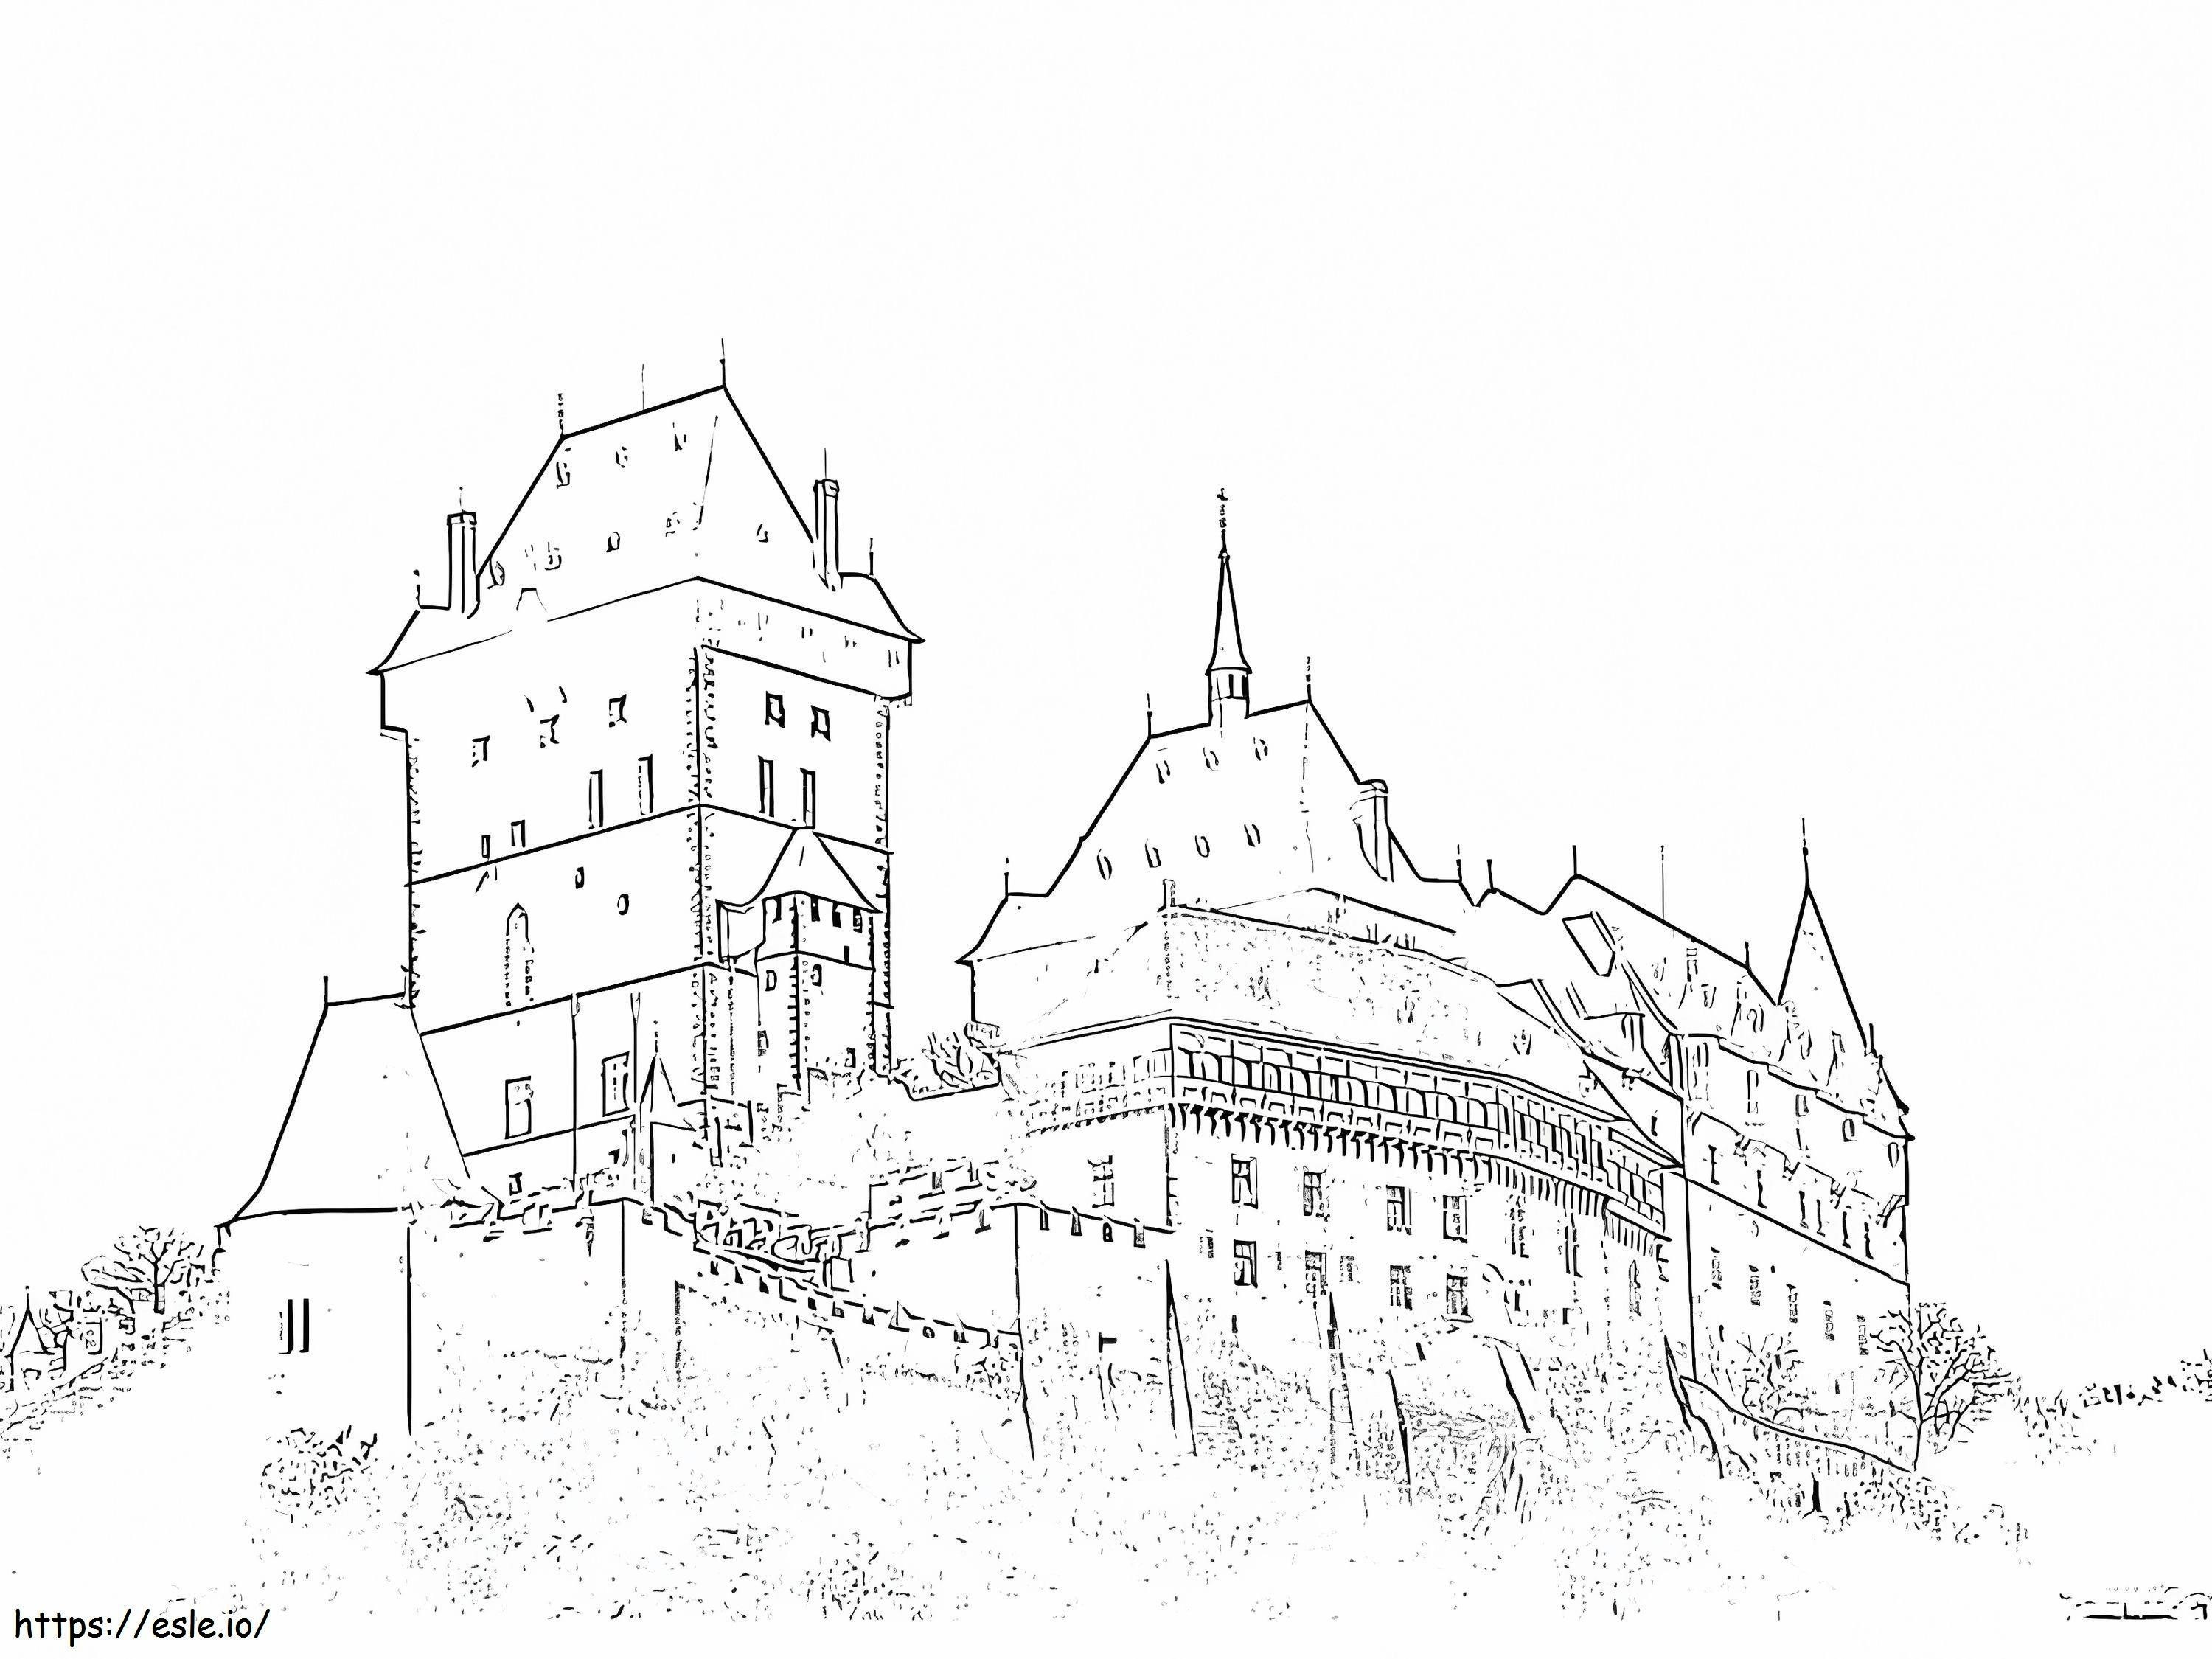 Burg Karlštejn ausmalbilder